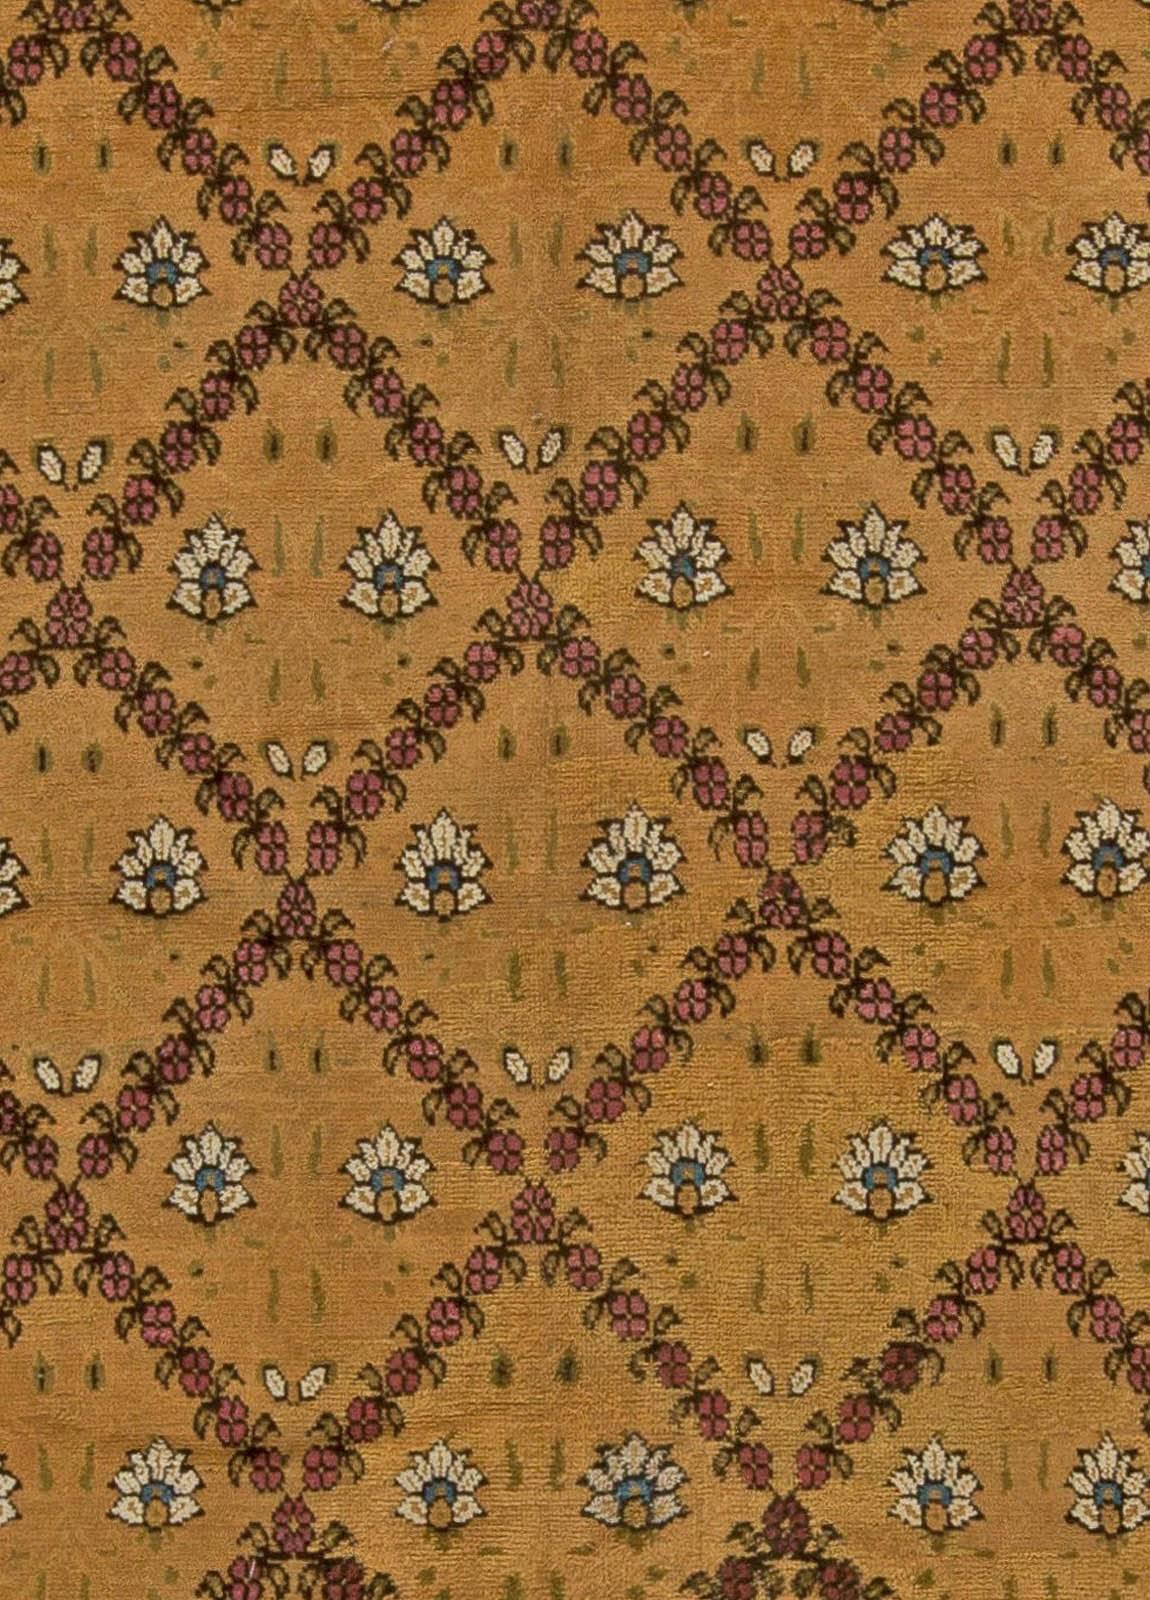 Early 20th century Indian botanic design handmade wool rug.
Size: 11'7